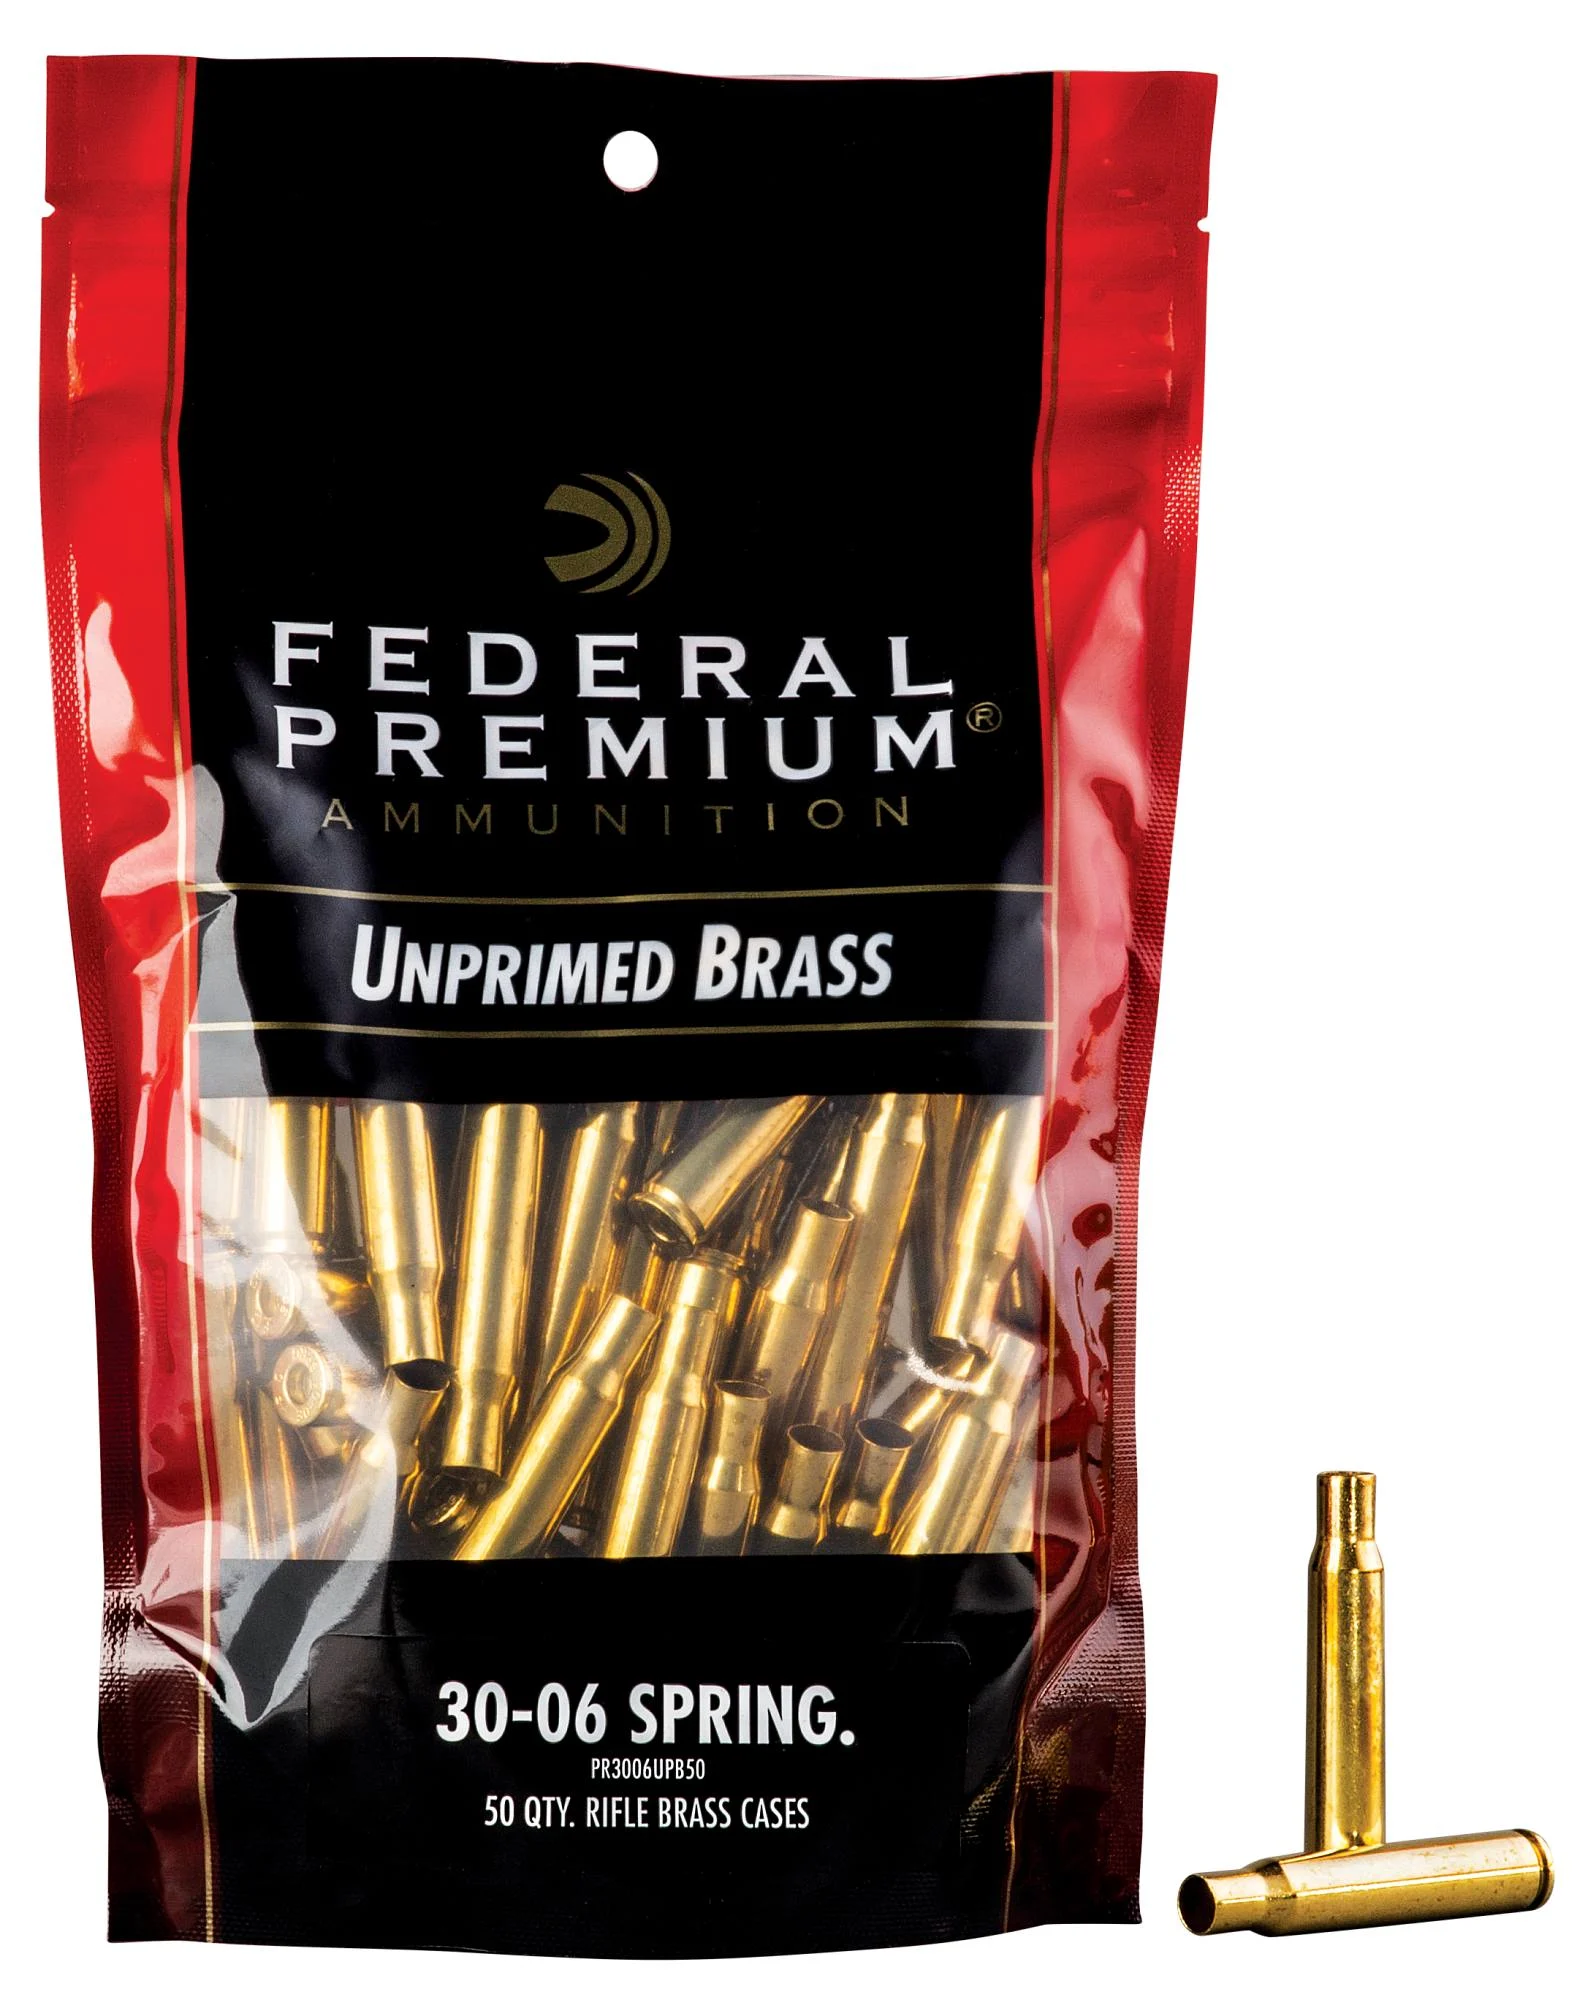 Gold Medal Rifle Brass 3006 Spr - Unprimed Bagged Brass